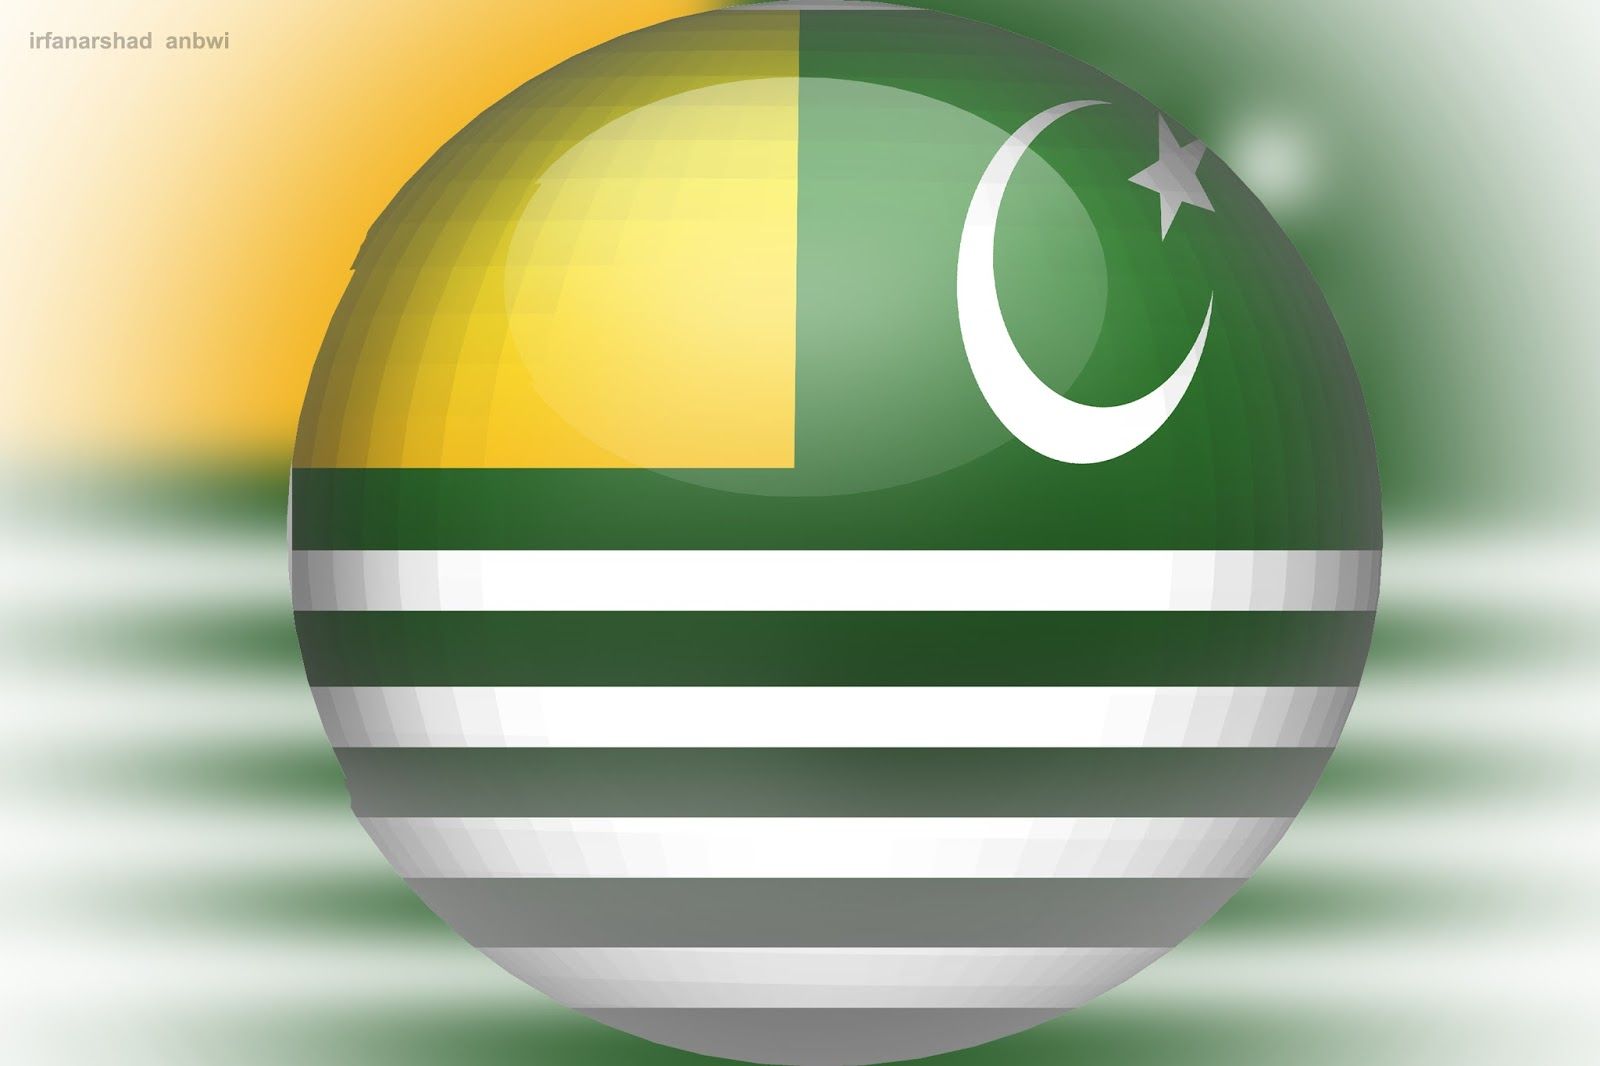 AMB DADYAL AZAD KASHMIR: Azad kashmir flag big circle shape